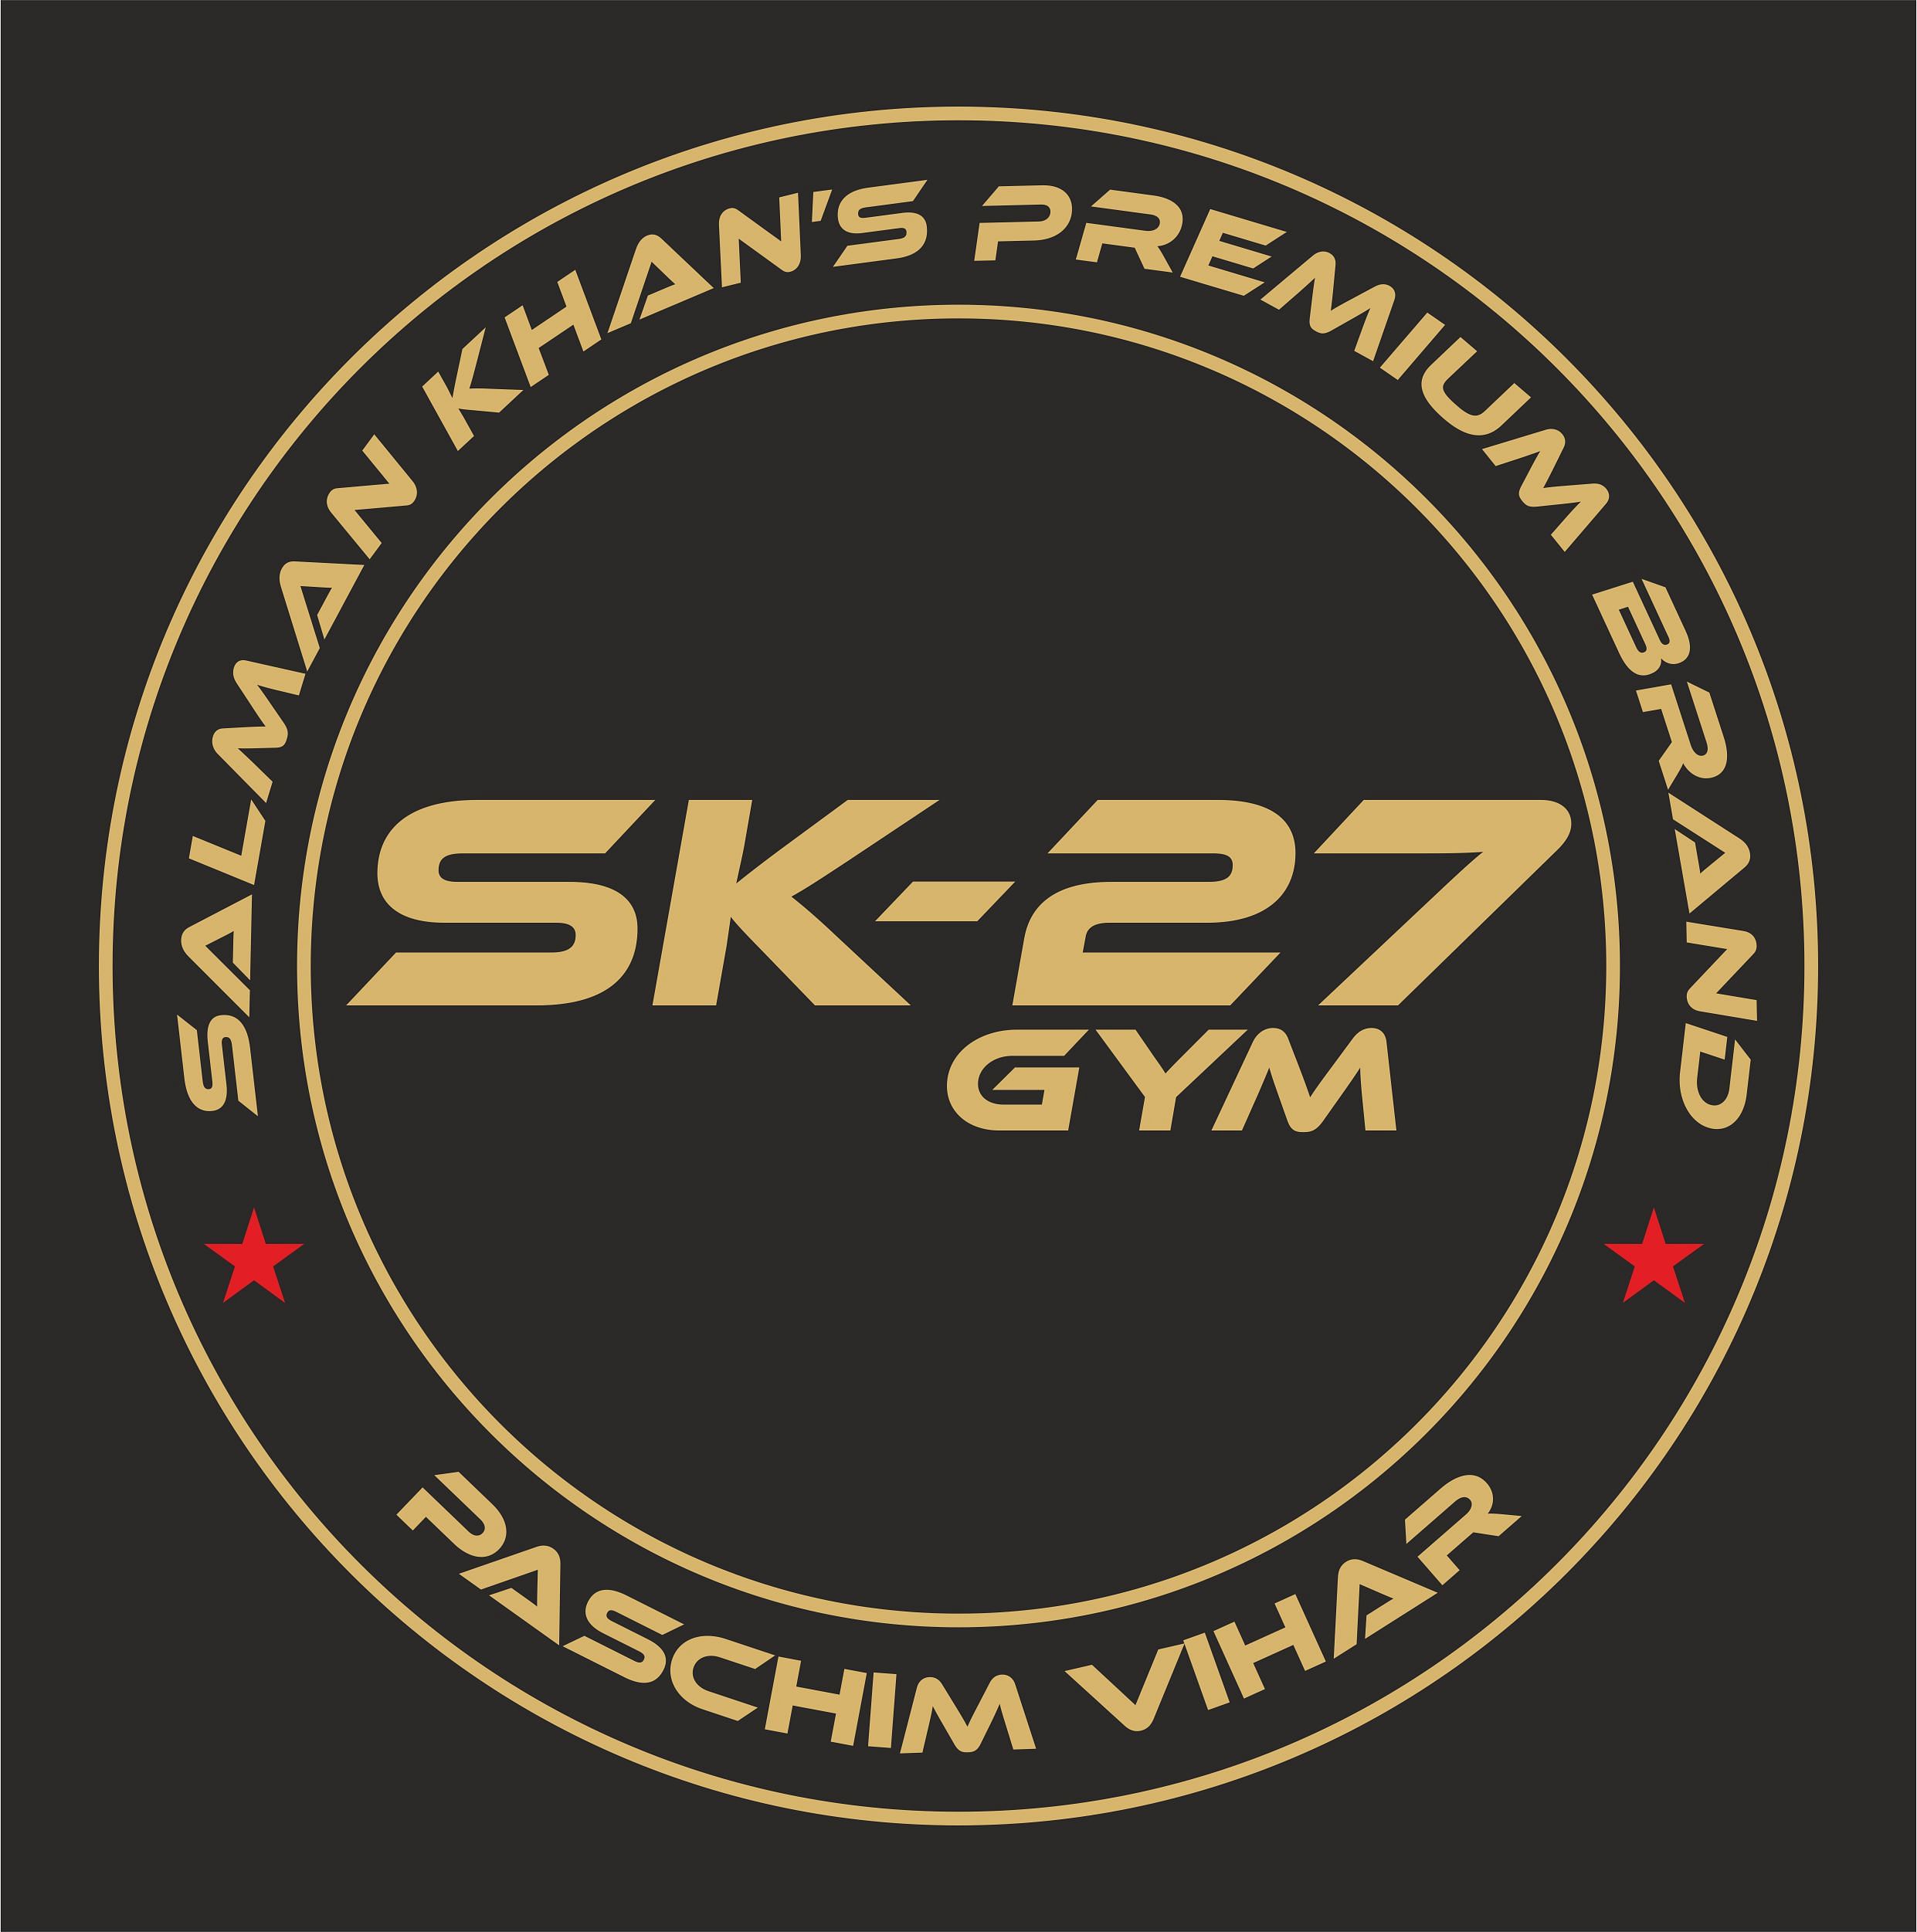 SK-27 Gym